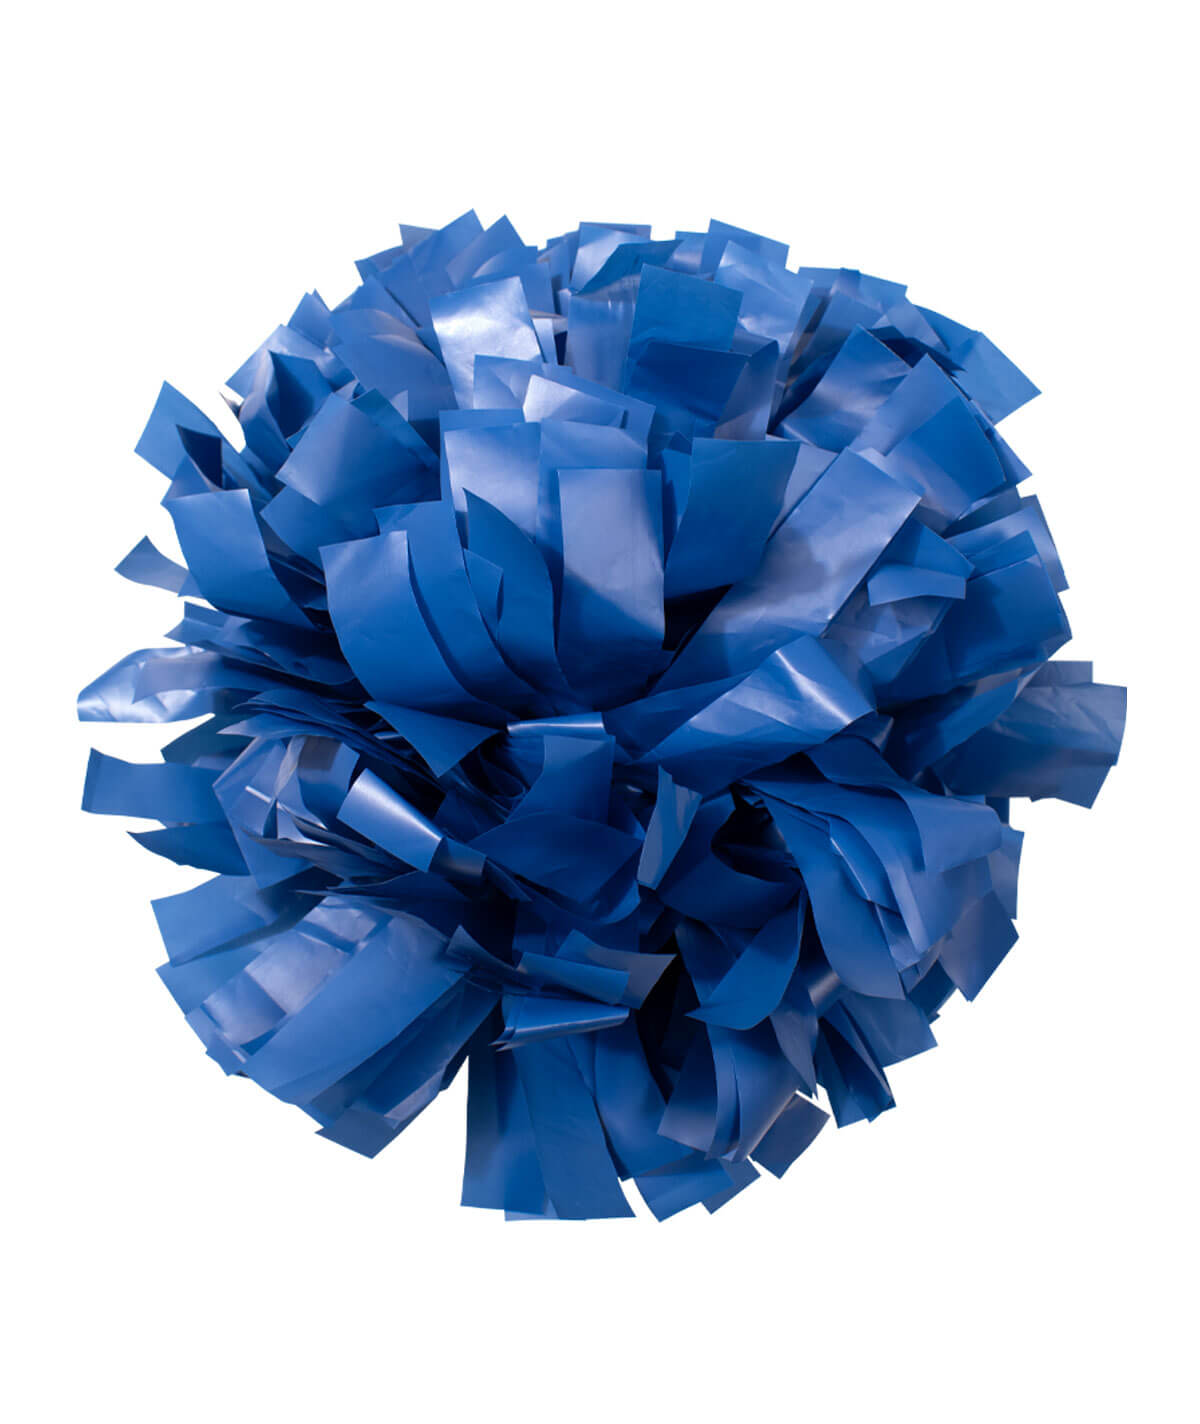 Royal Blue Tissue Pom Poms 3ct